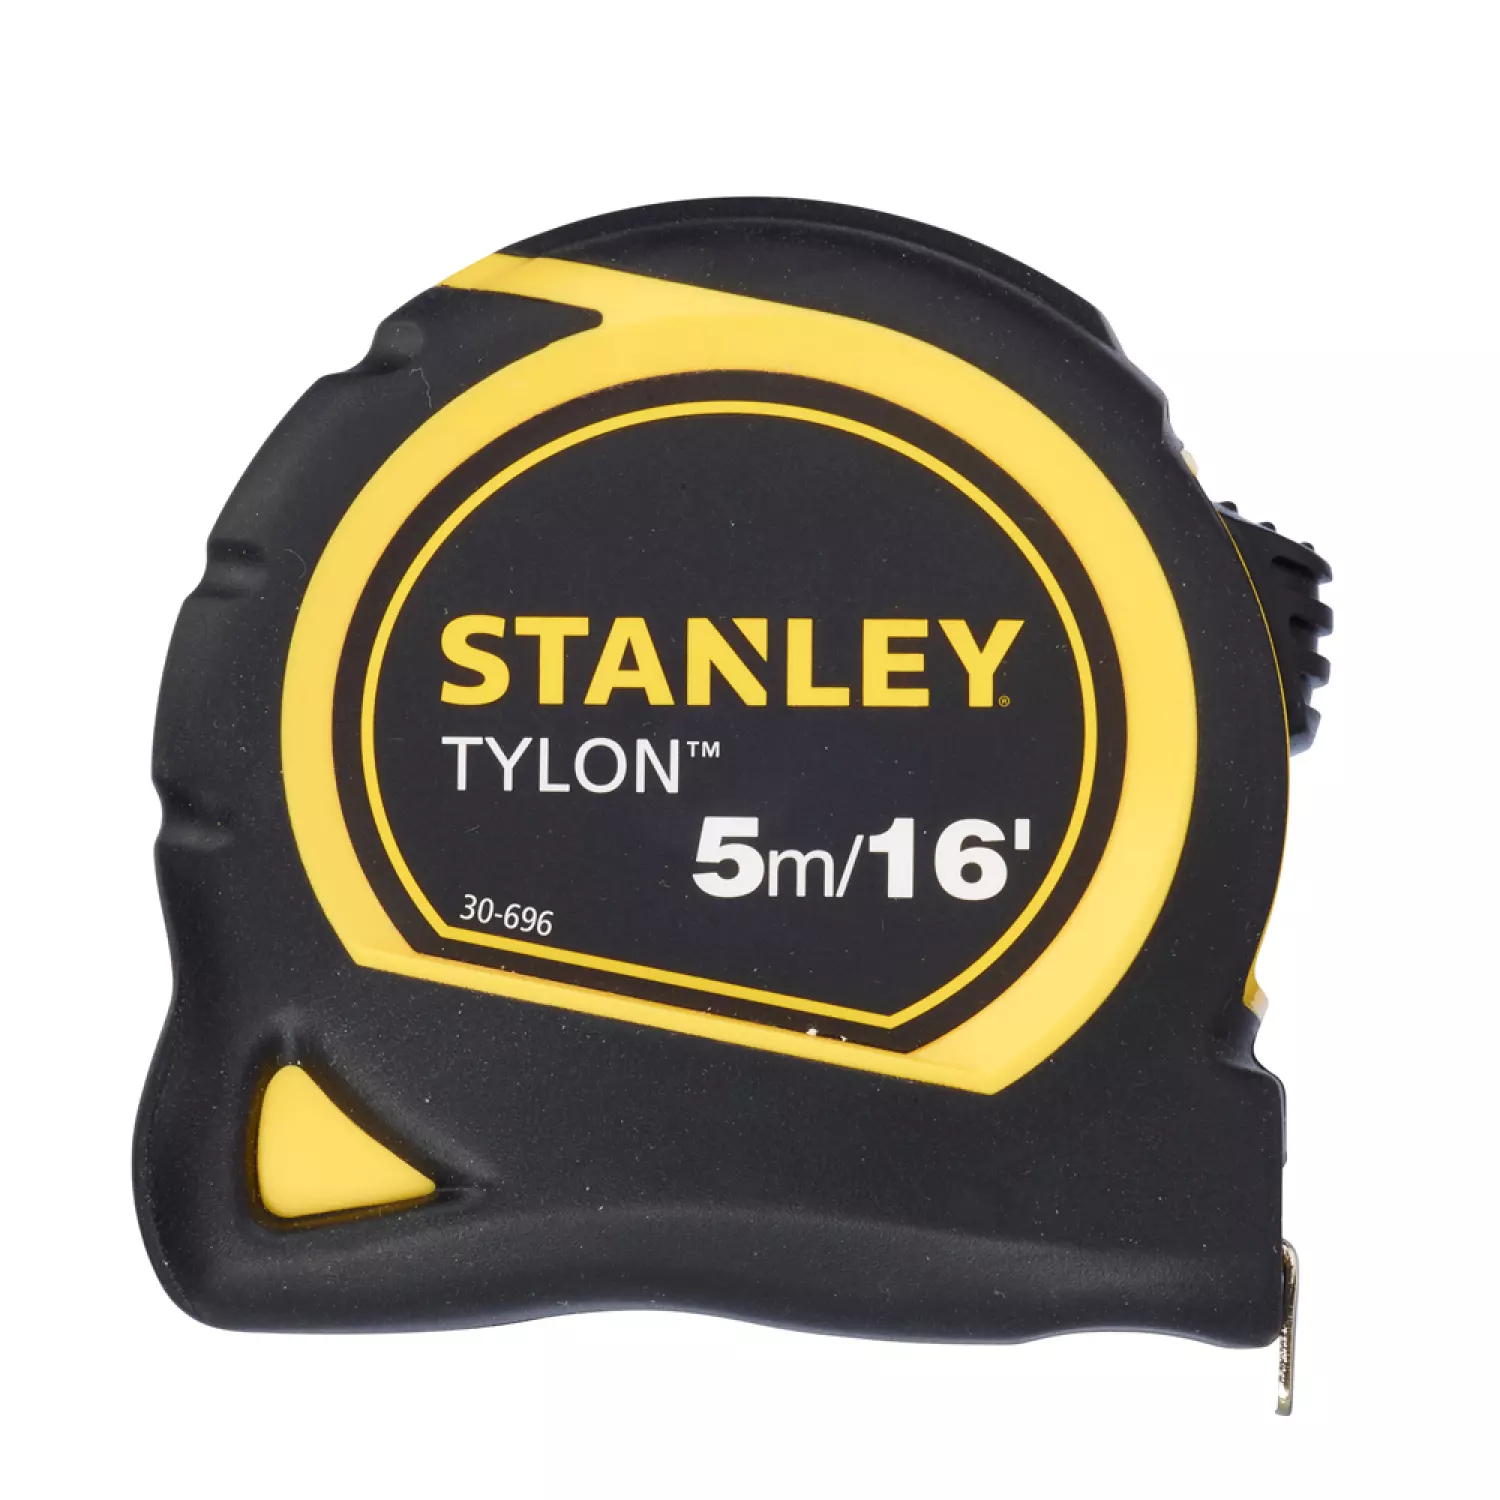 Stanley 0-30-696 Tylon Rolmaat - cm/inch - 5m x 19mm-image